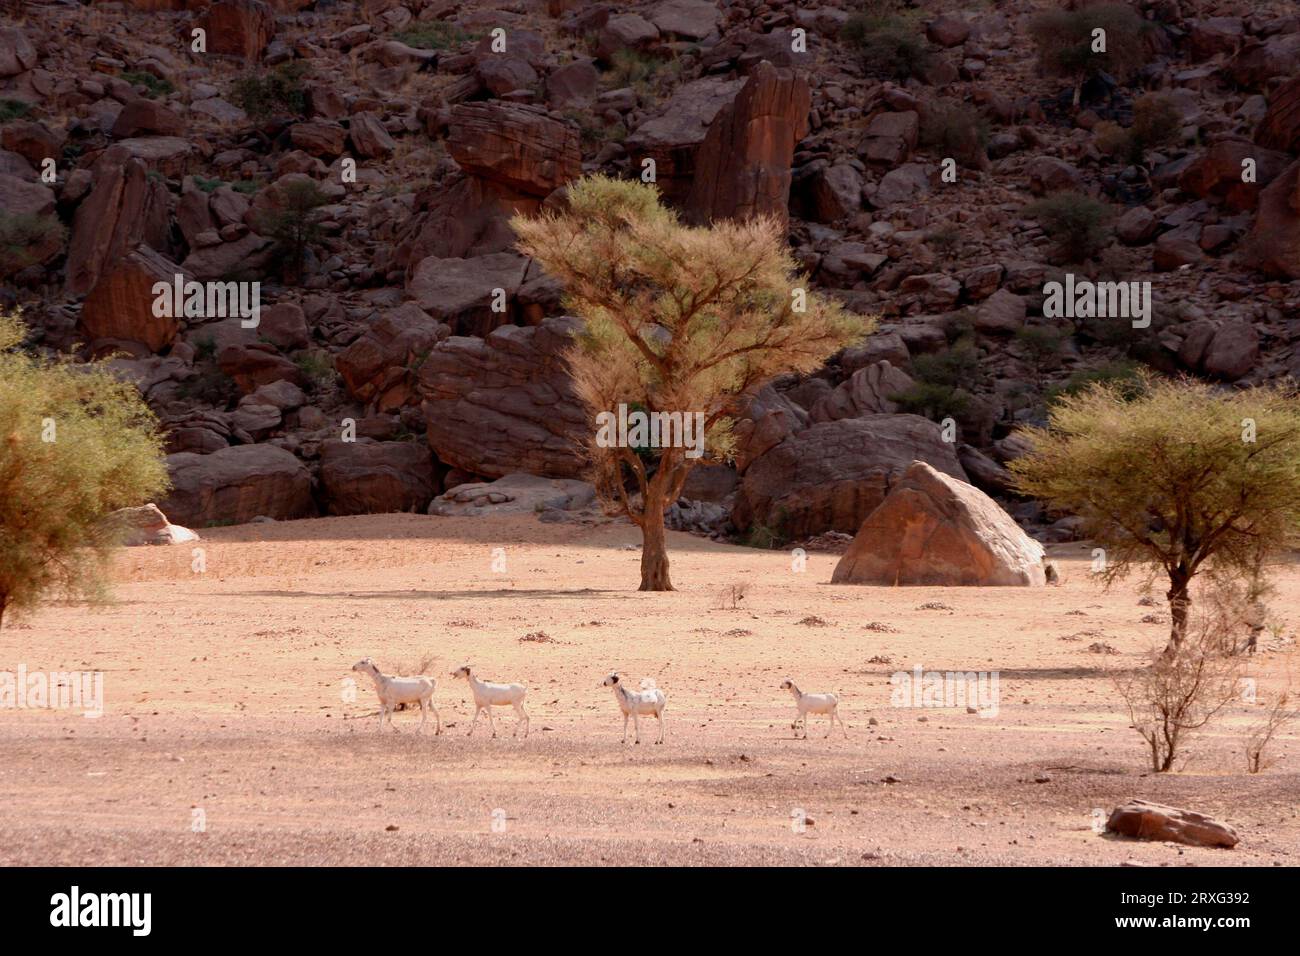 A family of goats walks through the barren landscape near Hombori- Mali Stock Photo